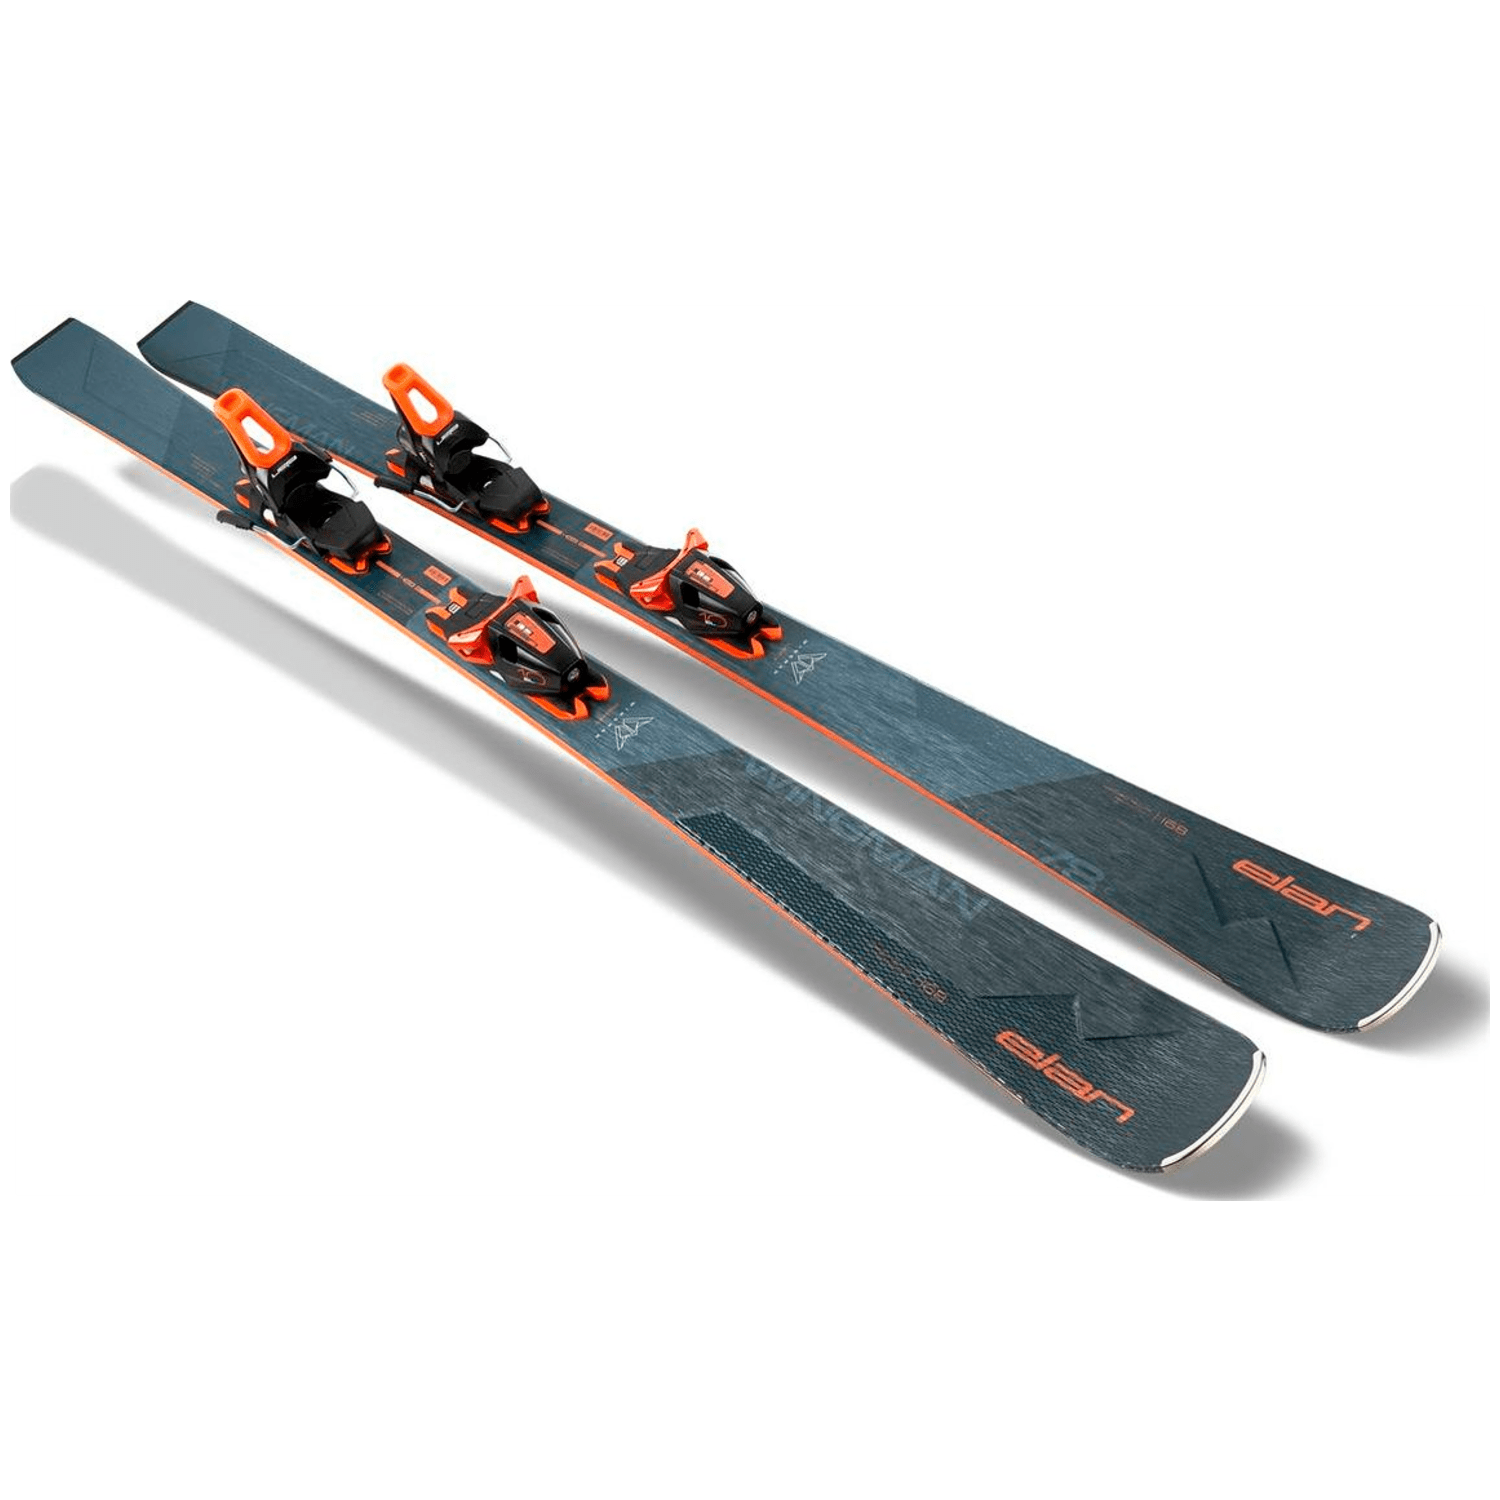 elan Wingman 78 C Power Shift Unisex All-Mountain Ski 